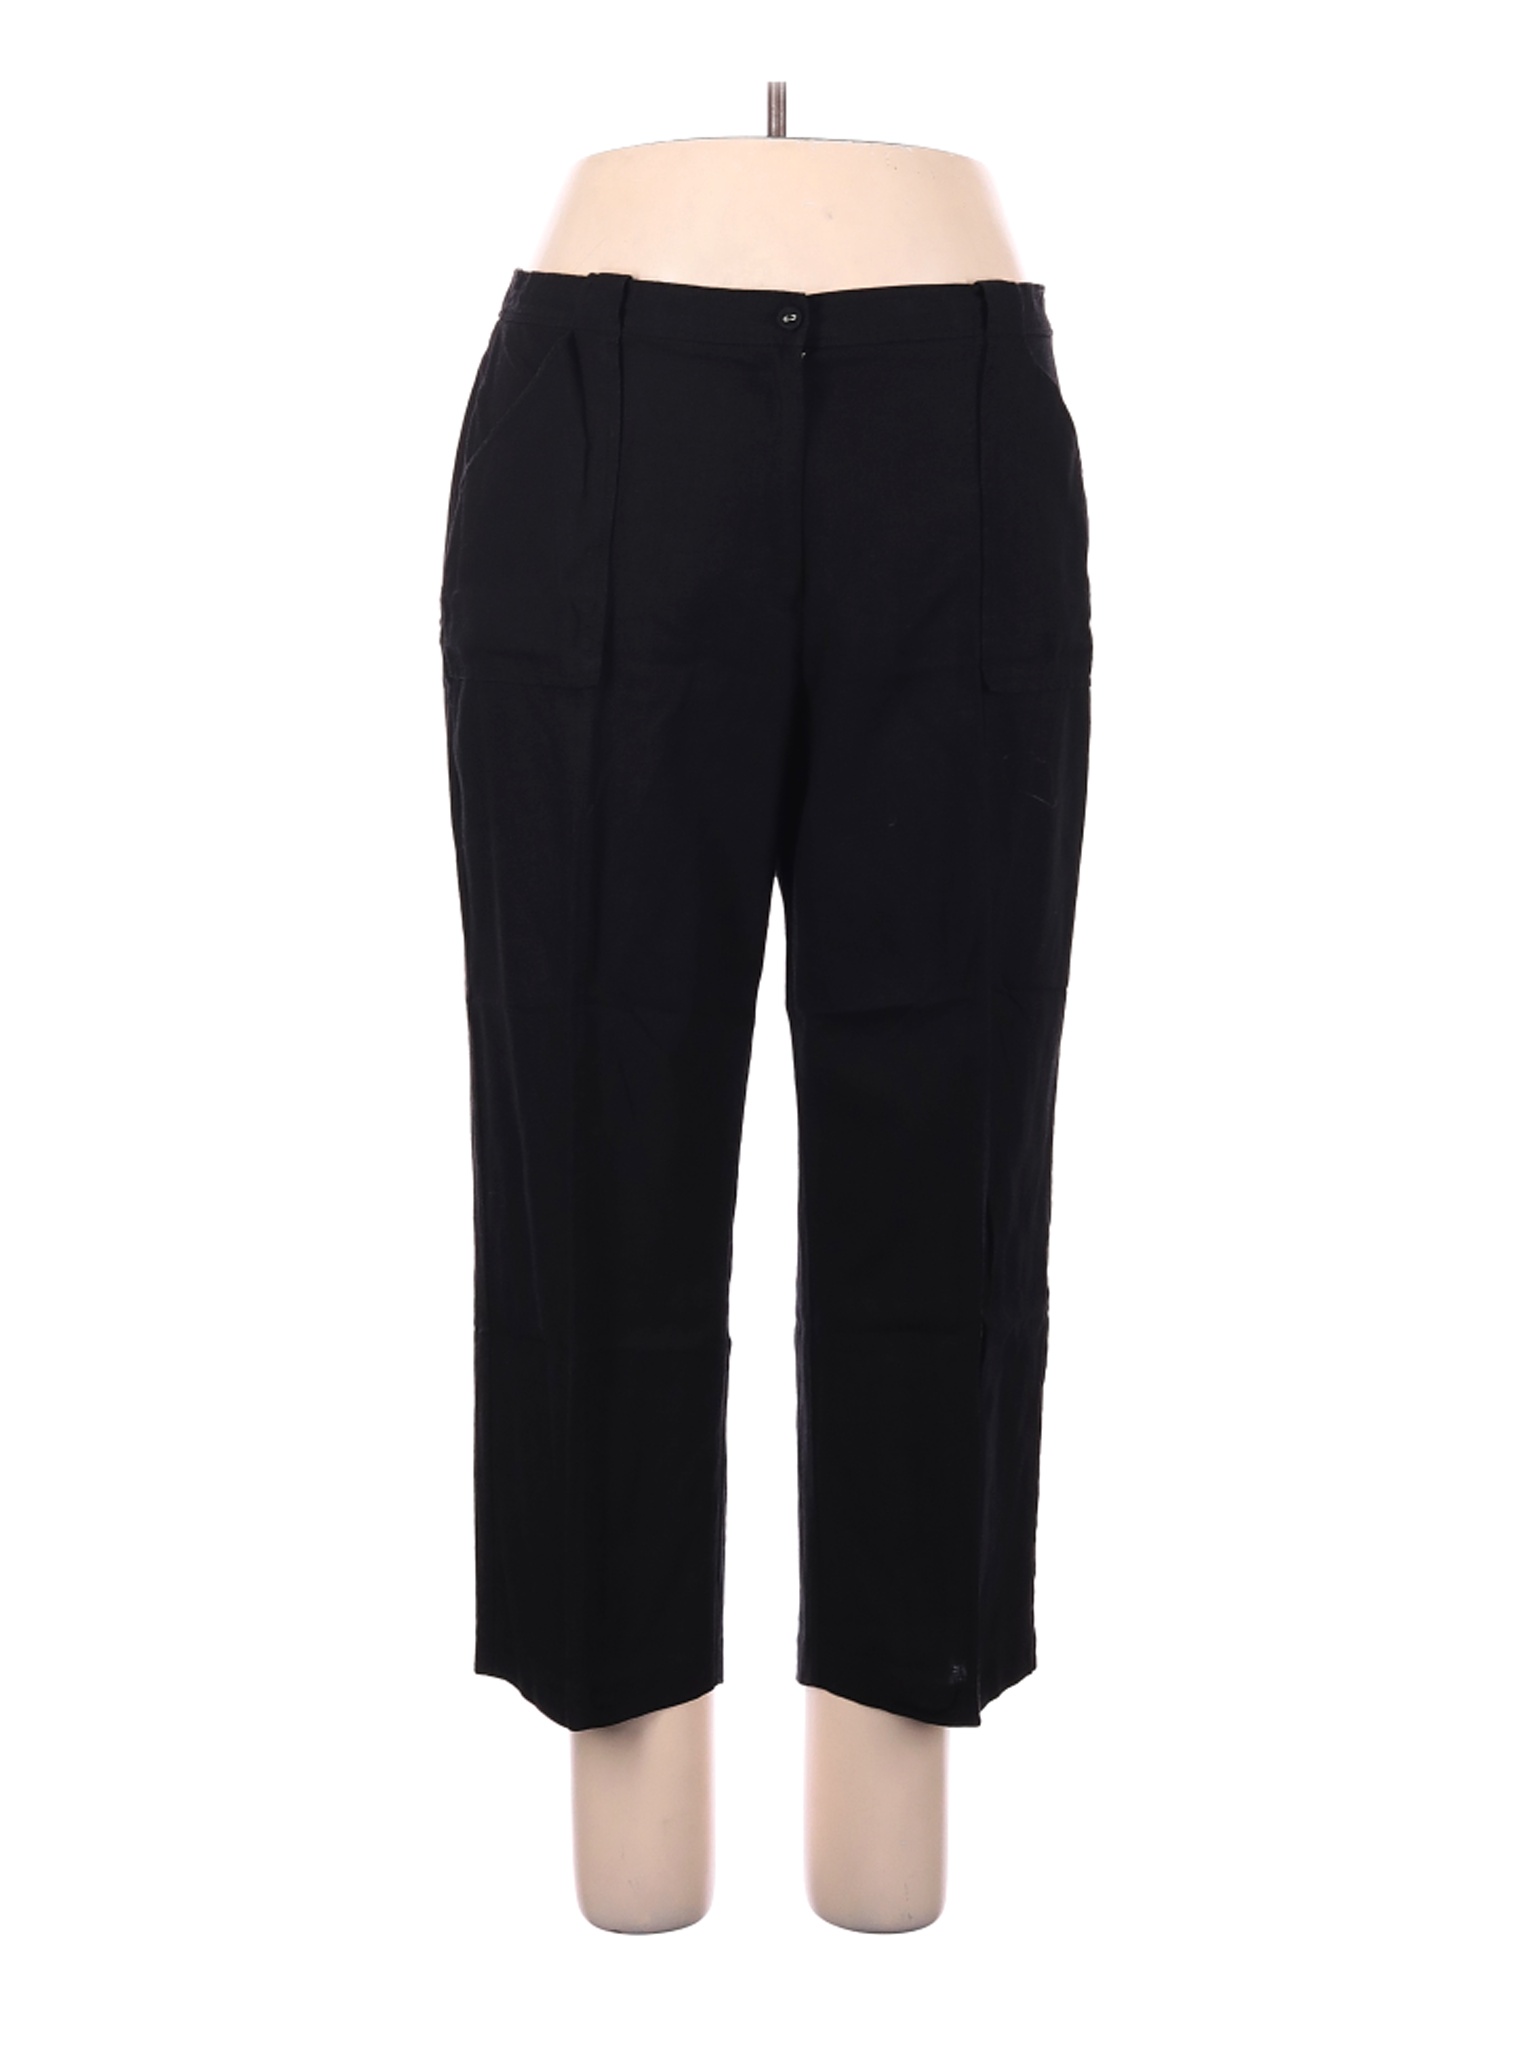 Sag Harbor Women Black Casual Pants 18 Plus | eBay